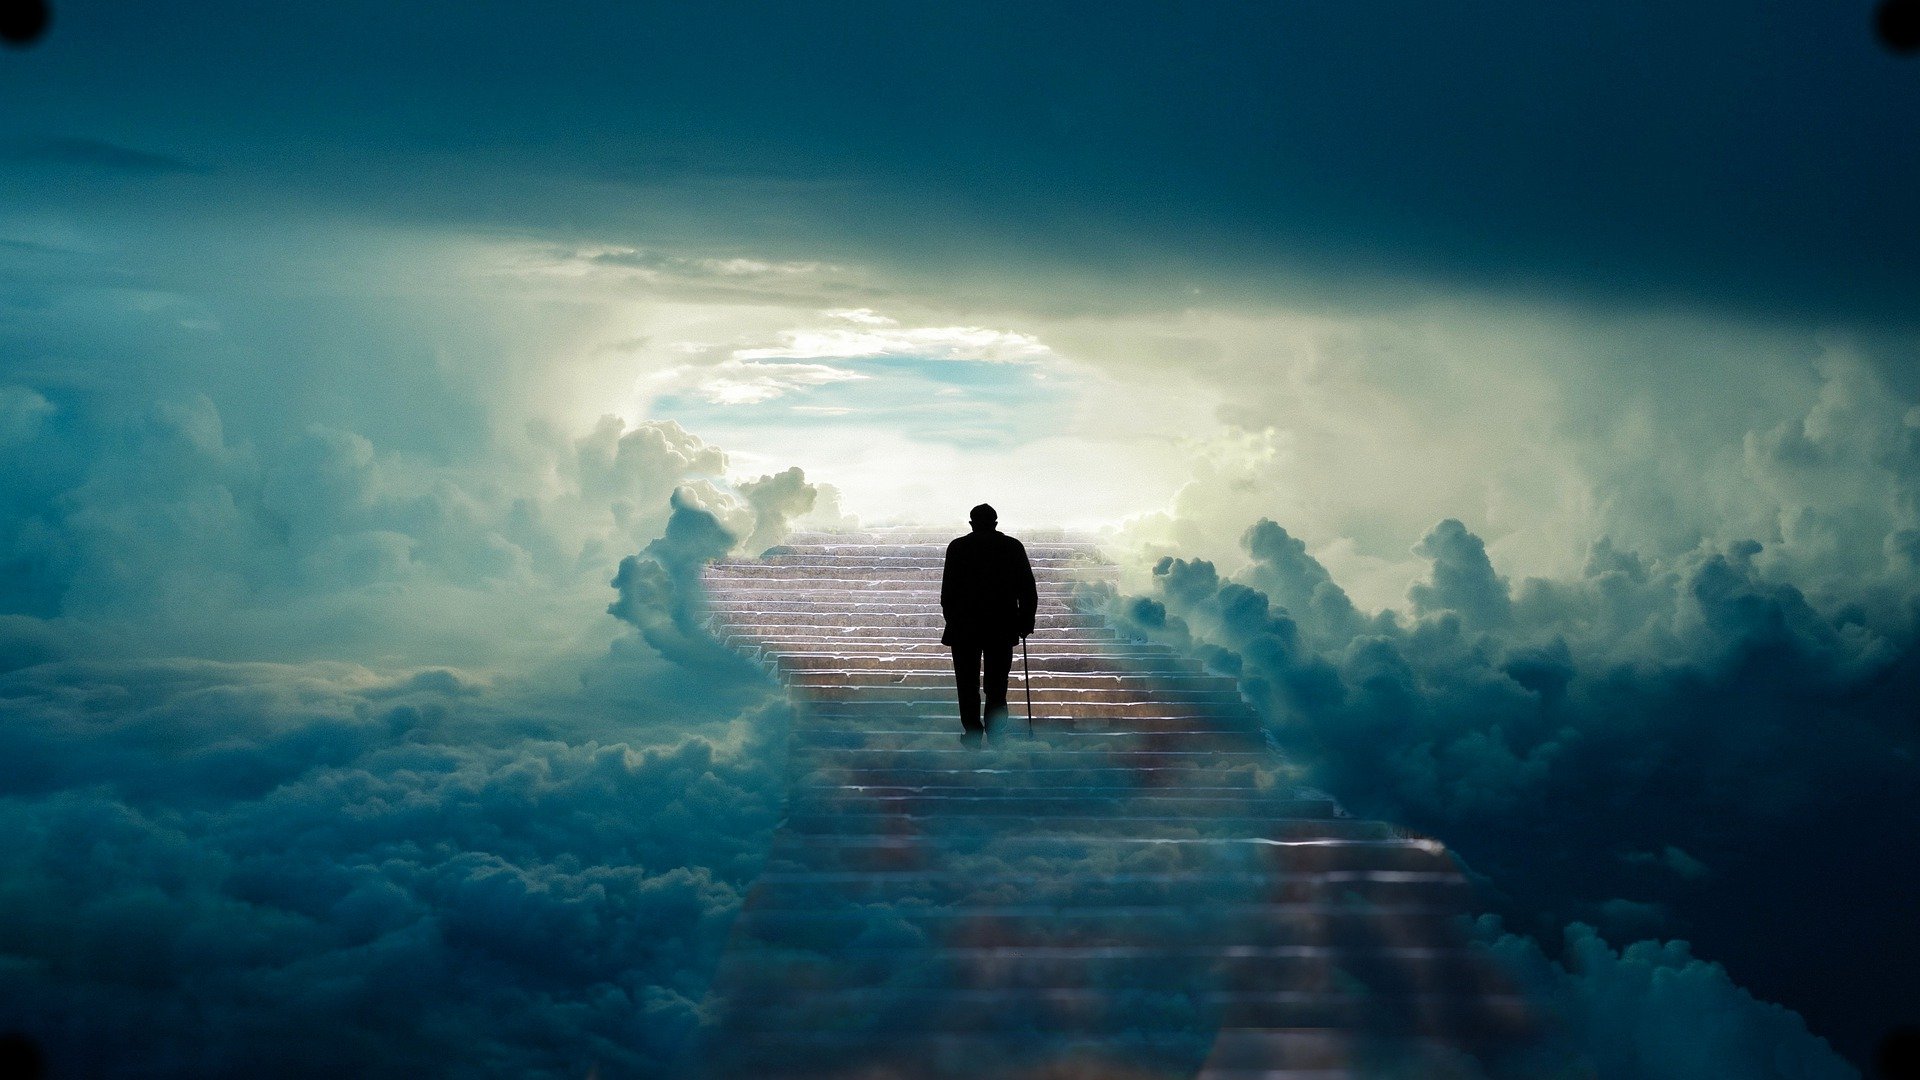 Man on his way to heaven | Source: Pixabay